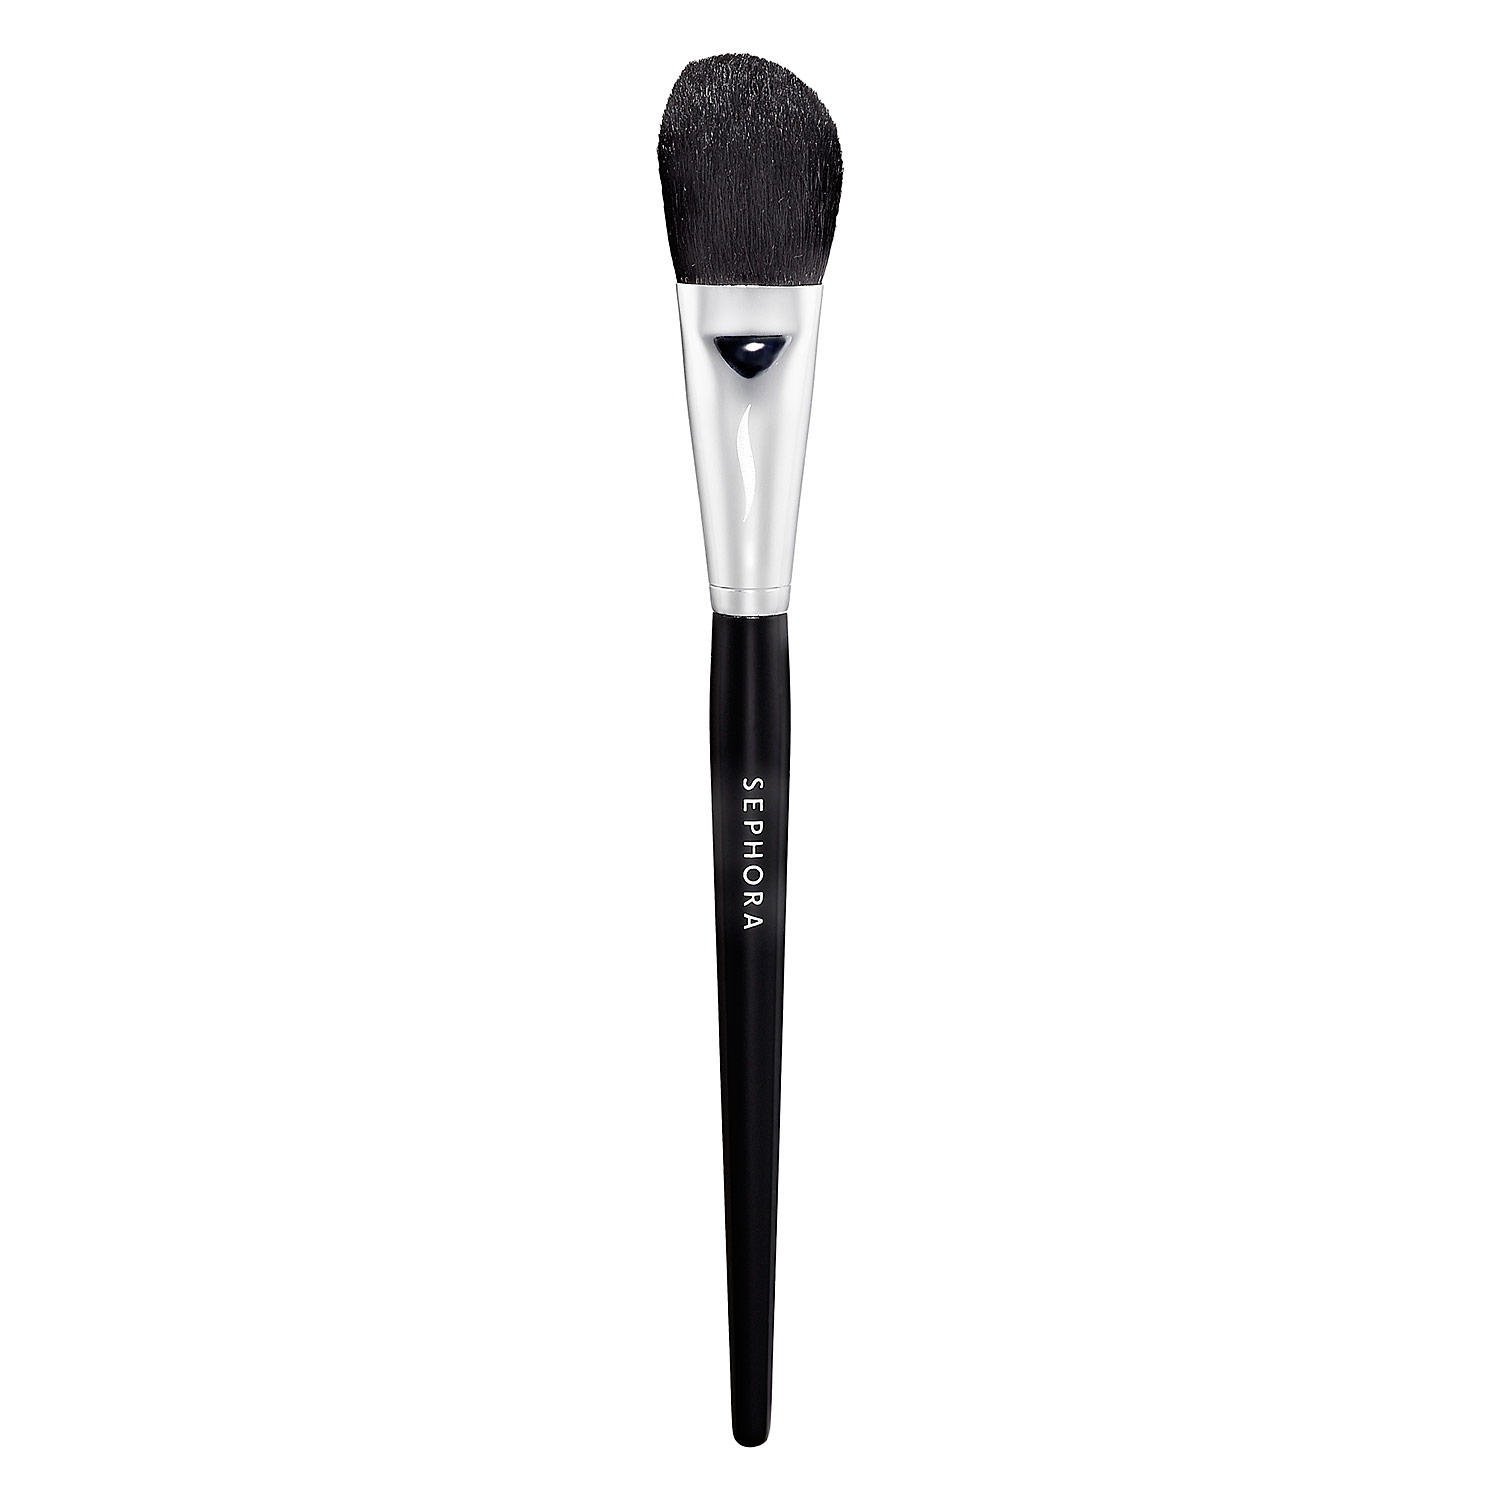 SEPHORA COLLECTION PRO Precision Blush Brush #73